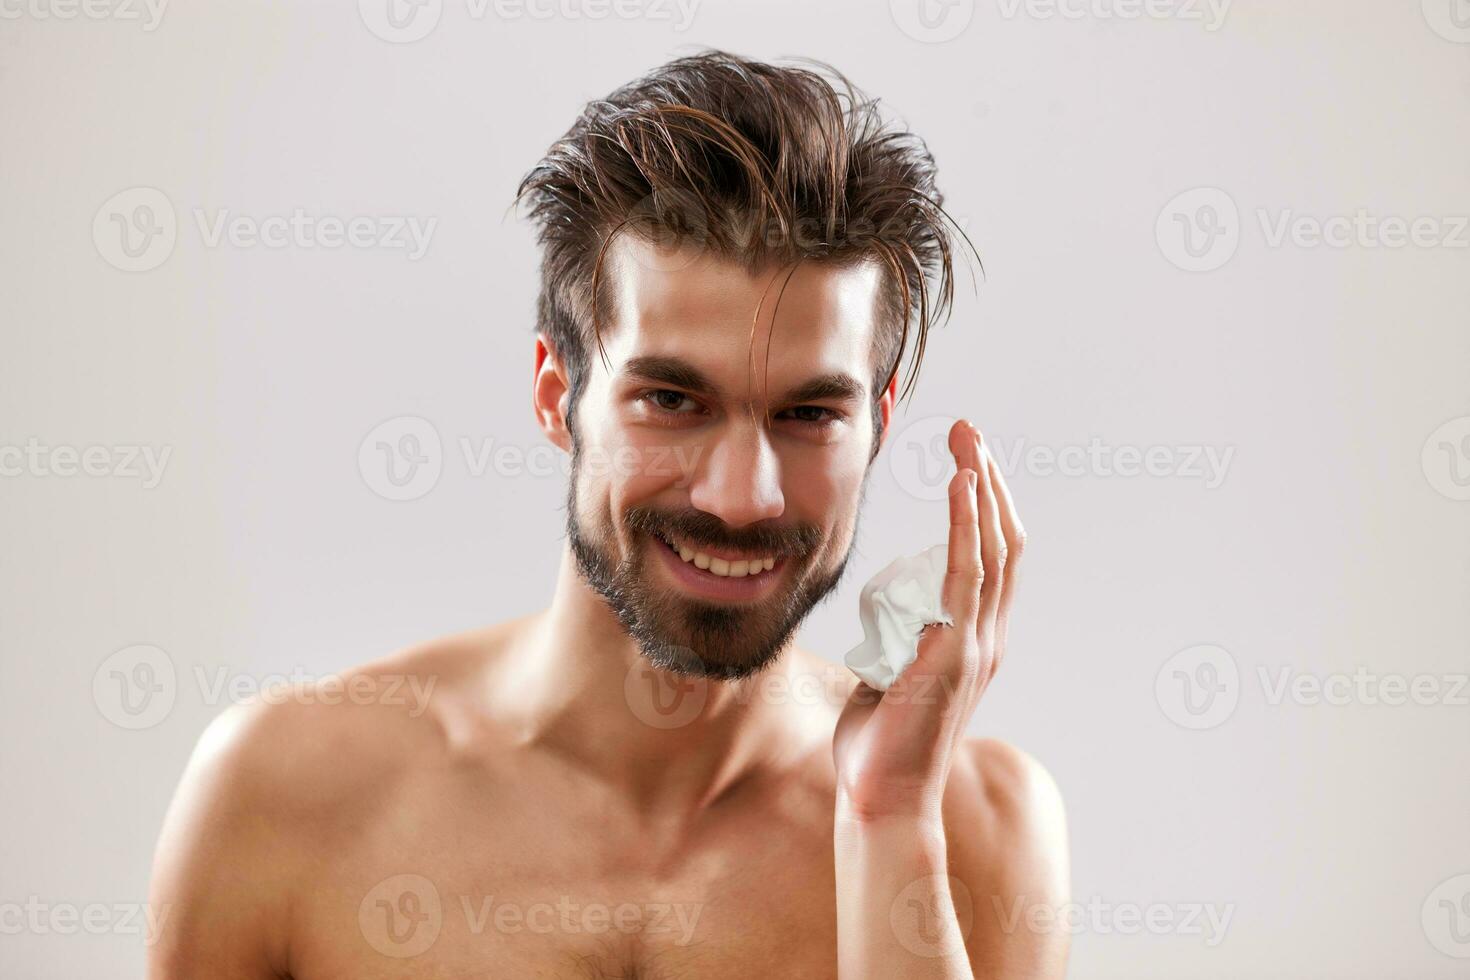 A man shaving photo